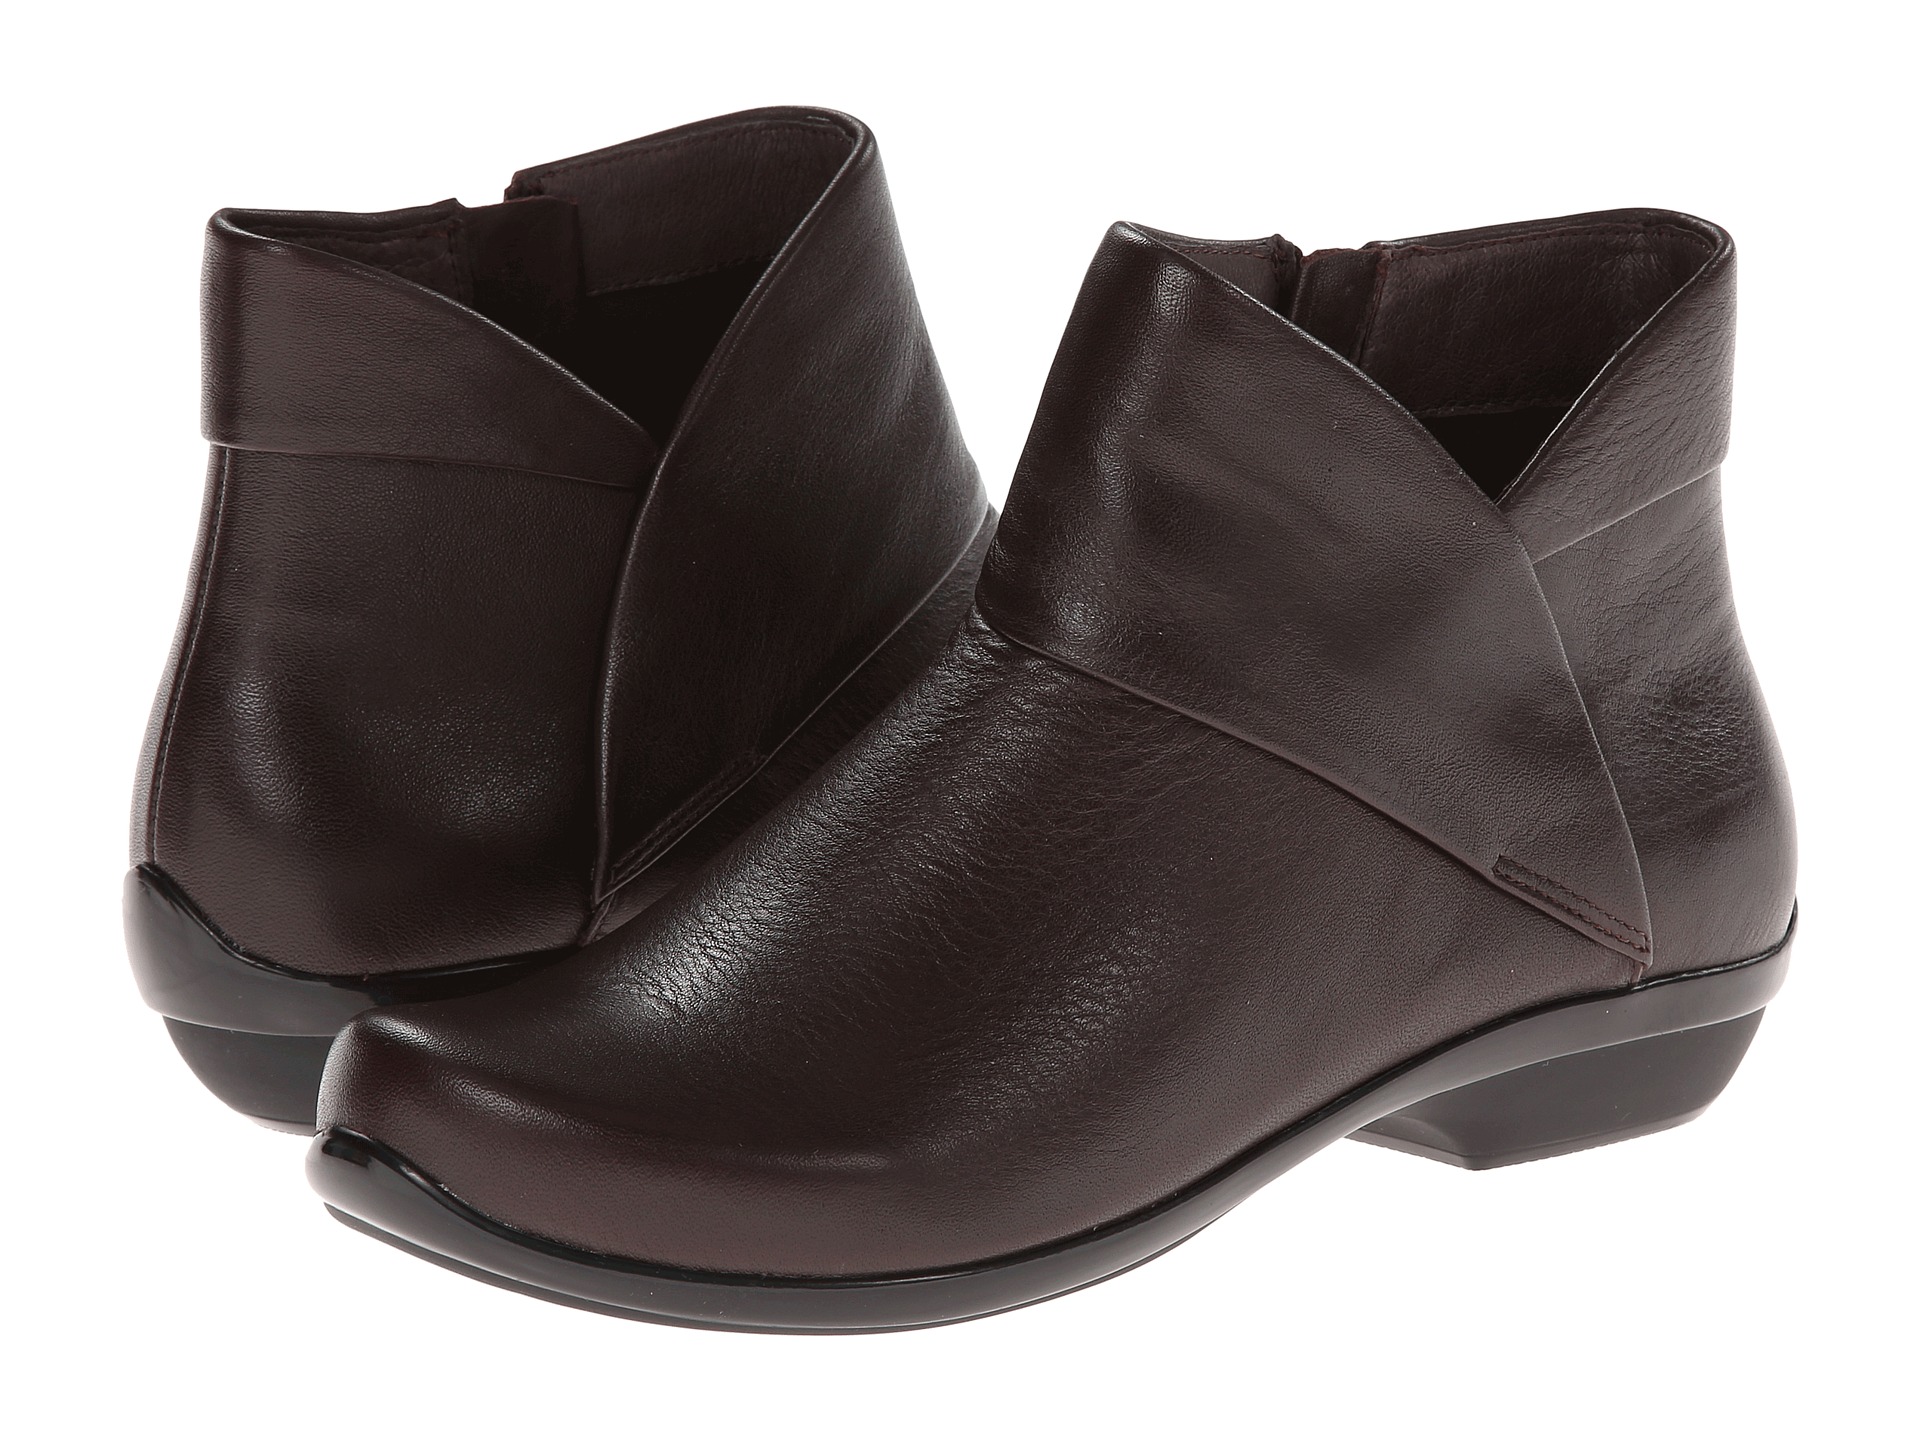 Best Sandals For Plantar Fasciitis: Zappos Keen Womens